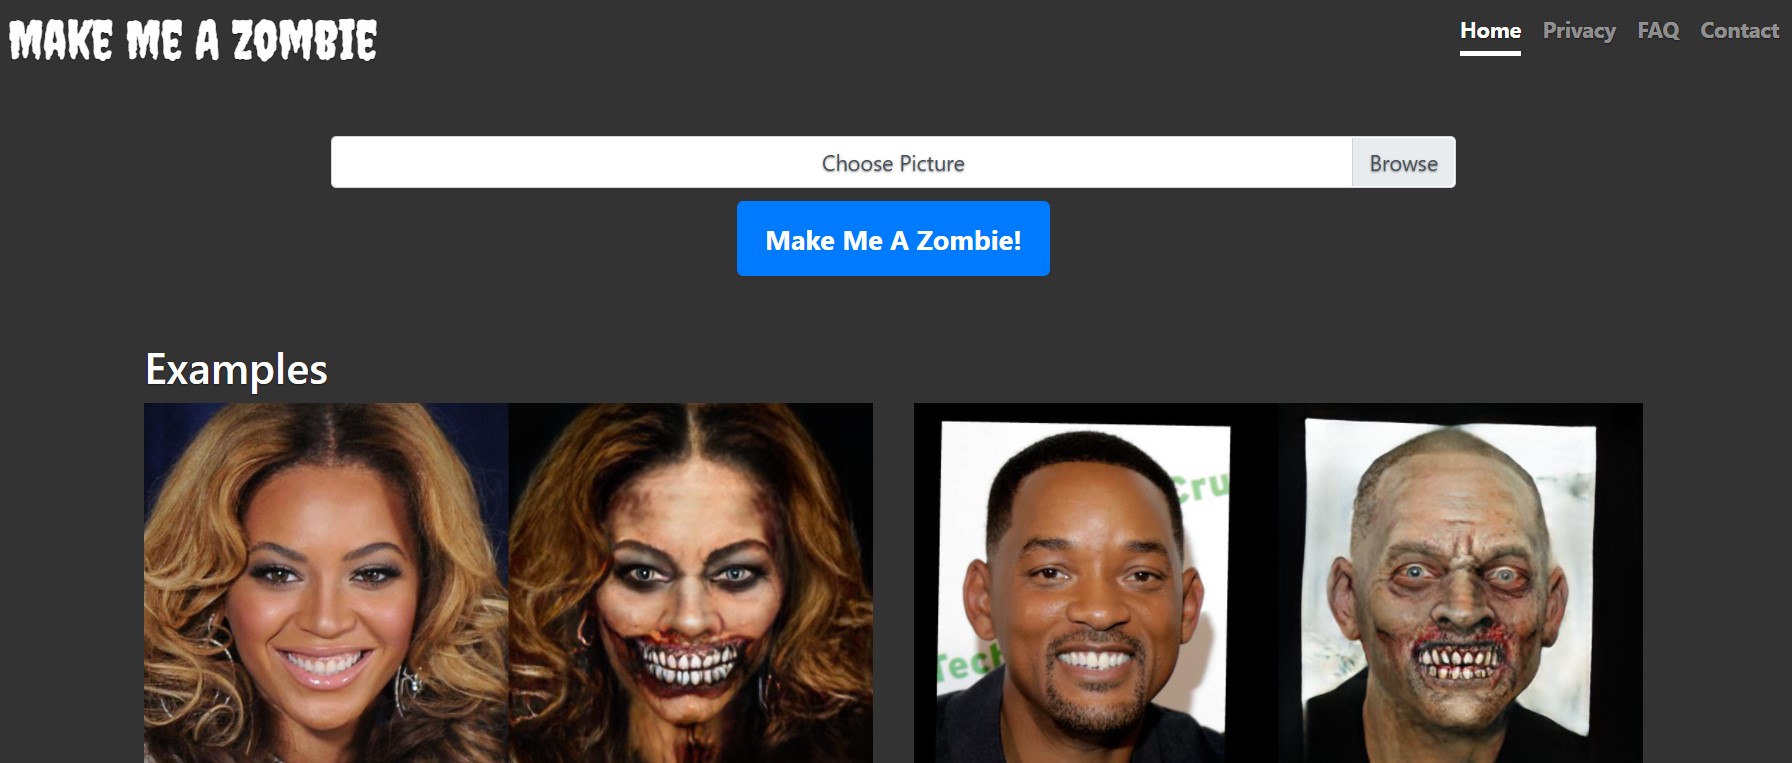 Make Me A Zombie — сайт, который превратит вас в зомби